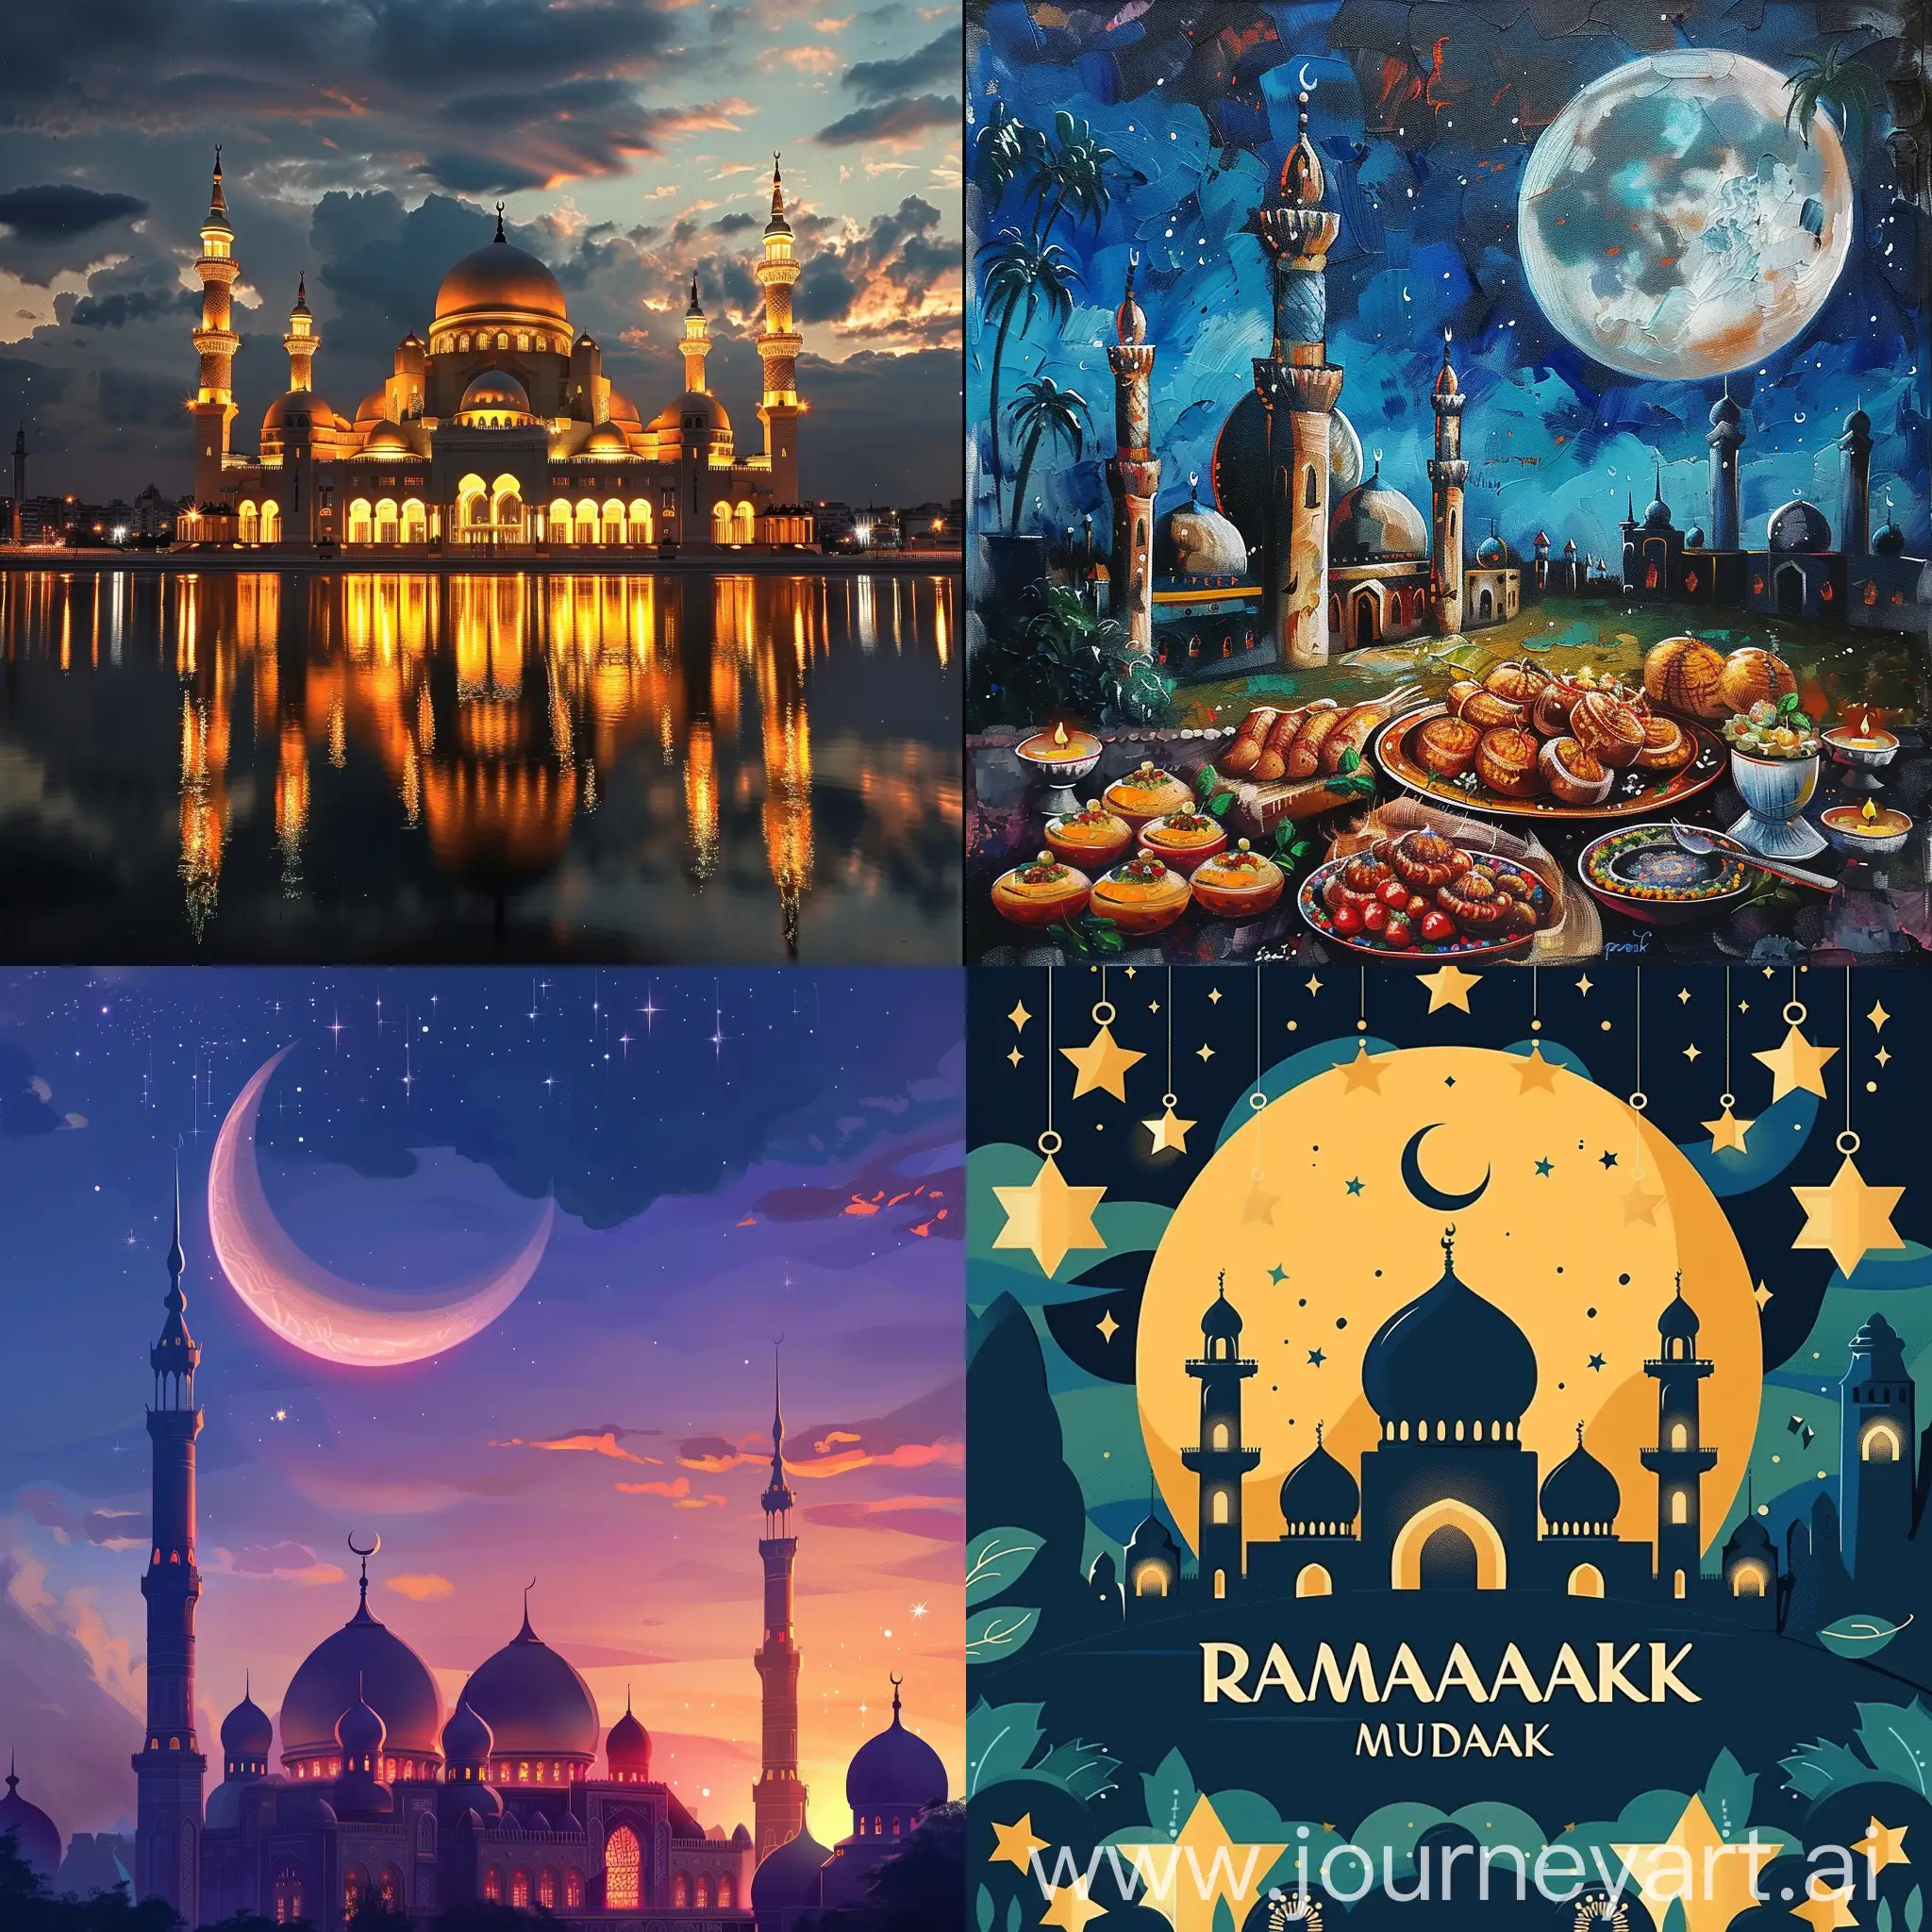 Celebrating-Ramadan-Mubarak-with-Traditional-Festivities